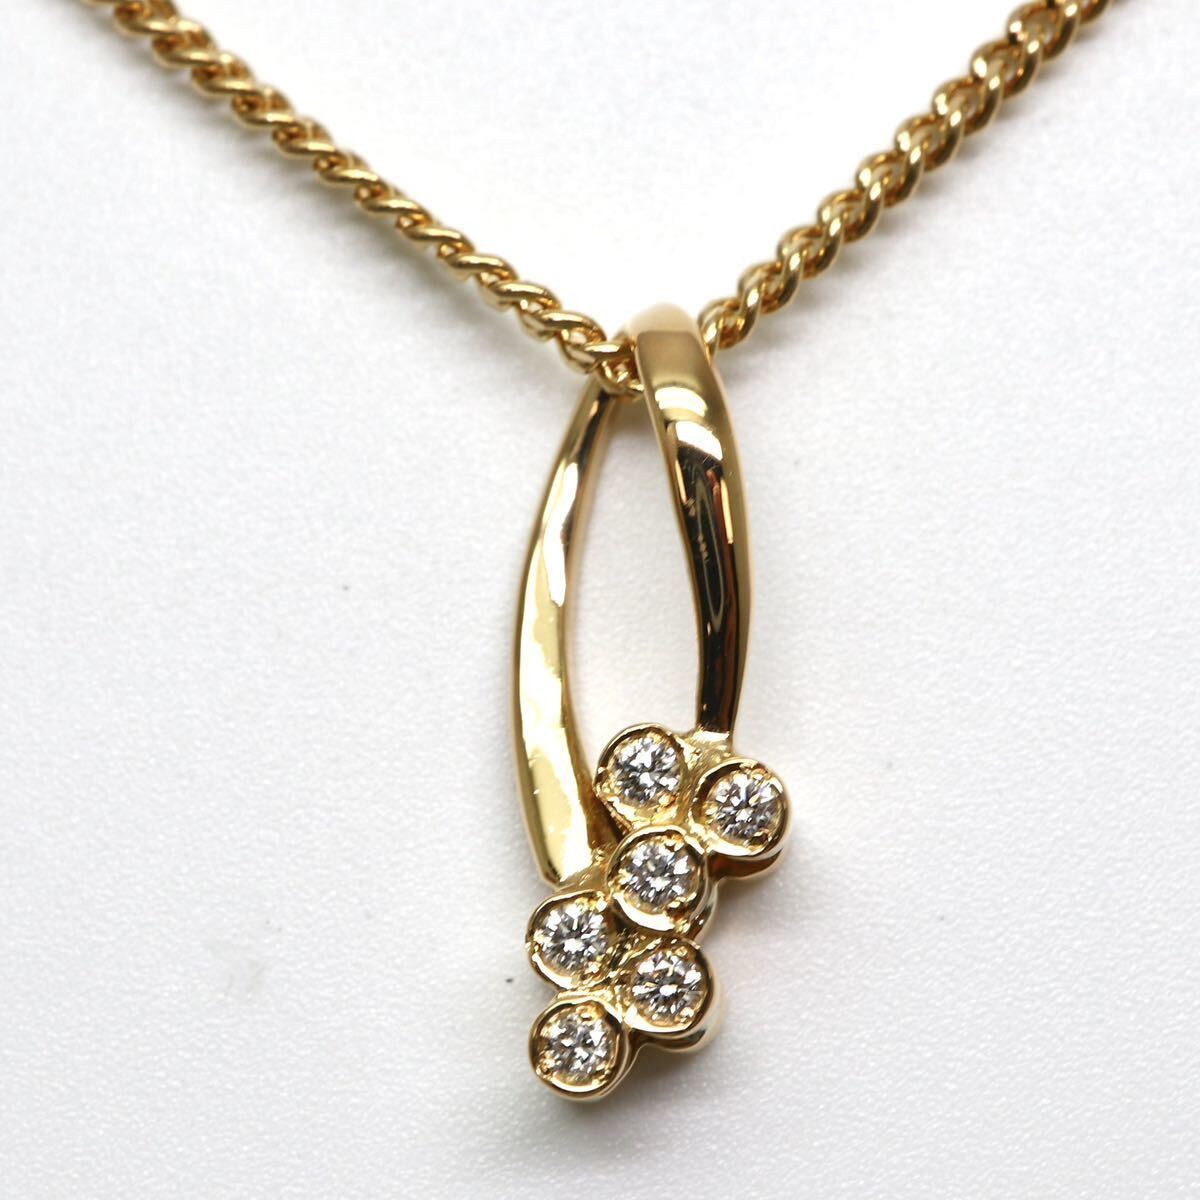 POLA(ポーラ)◆K18(750) 天然ダイヤモンドネックレス◆A◎ 約6.4g 約39.0cm pearl パール jewelry necklace ジュエリーEE1/EE1の画像1